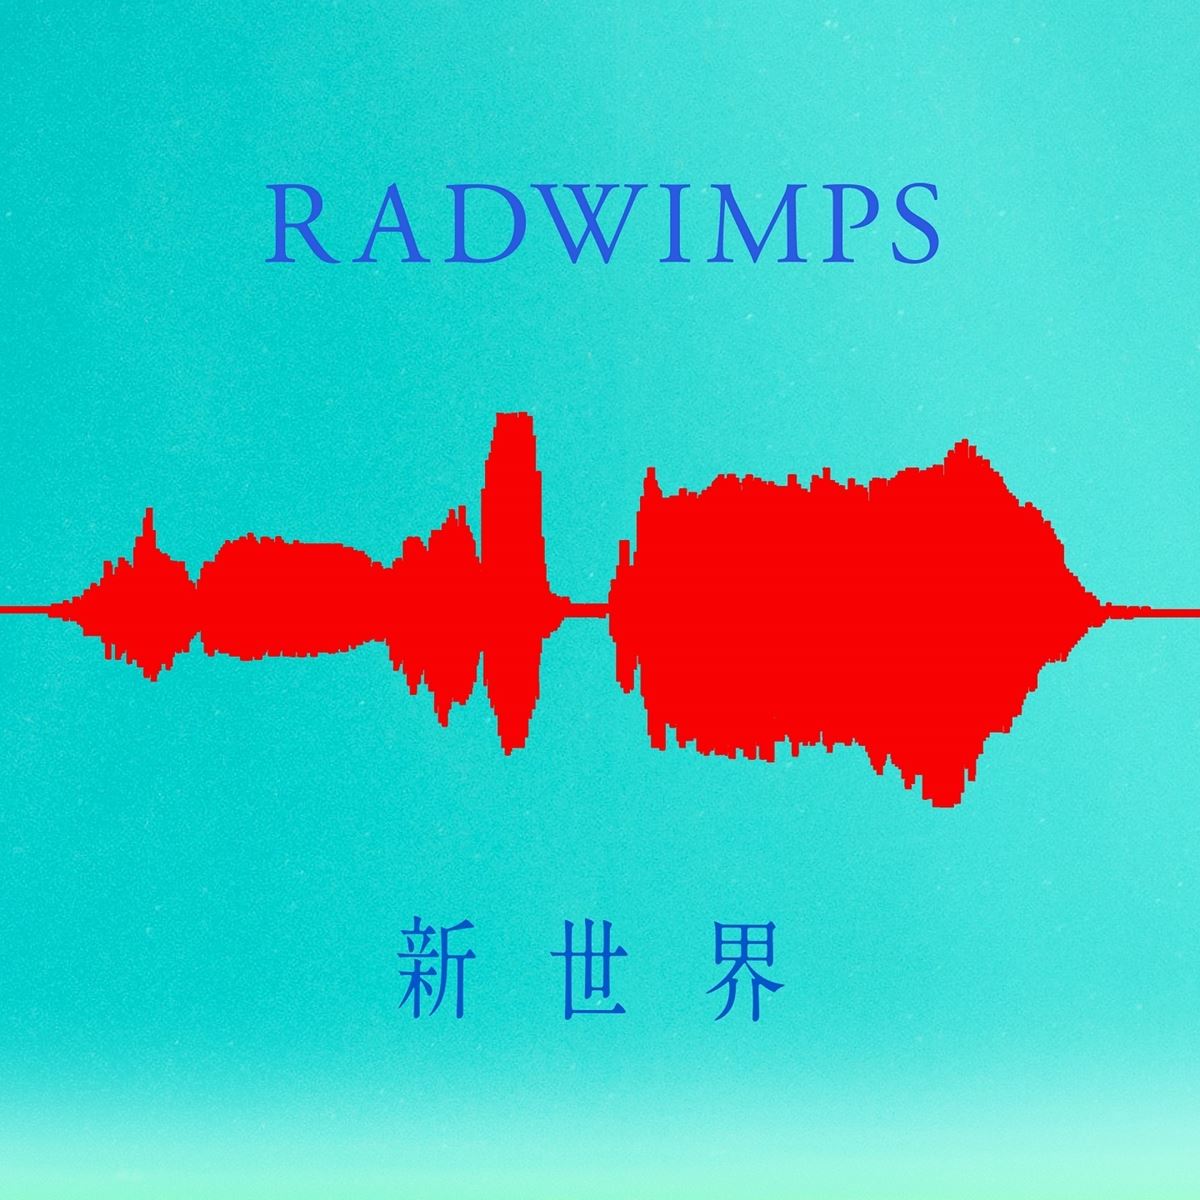 Radwimps 新曲 新世界 を本日より配信開始 この先の世界を皆で創造